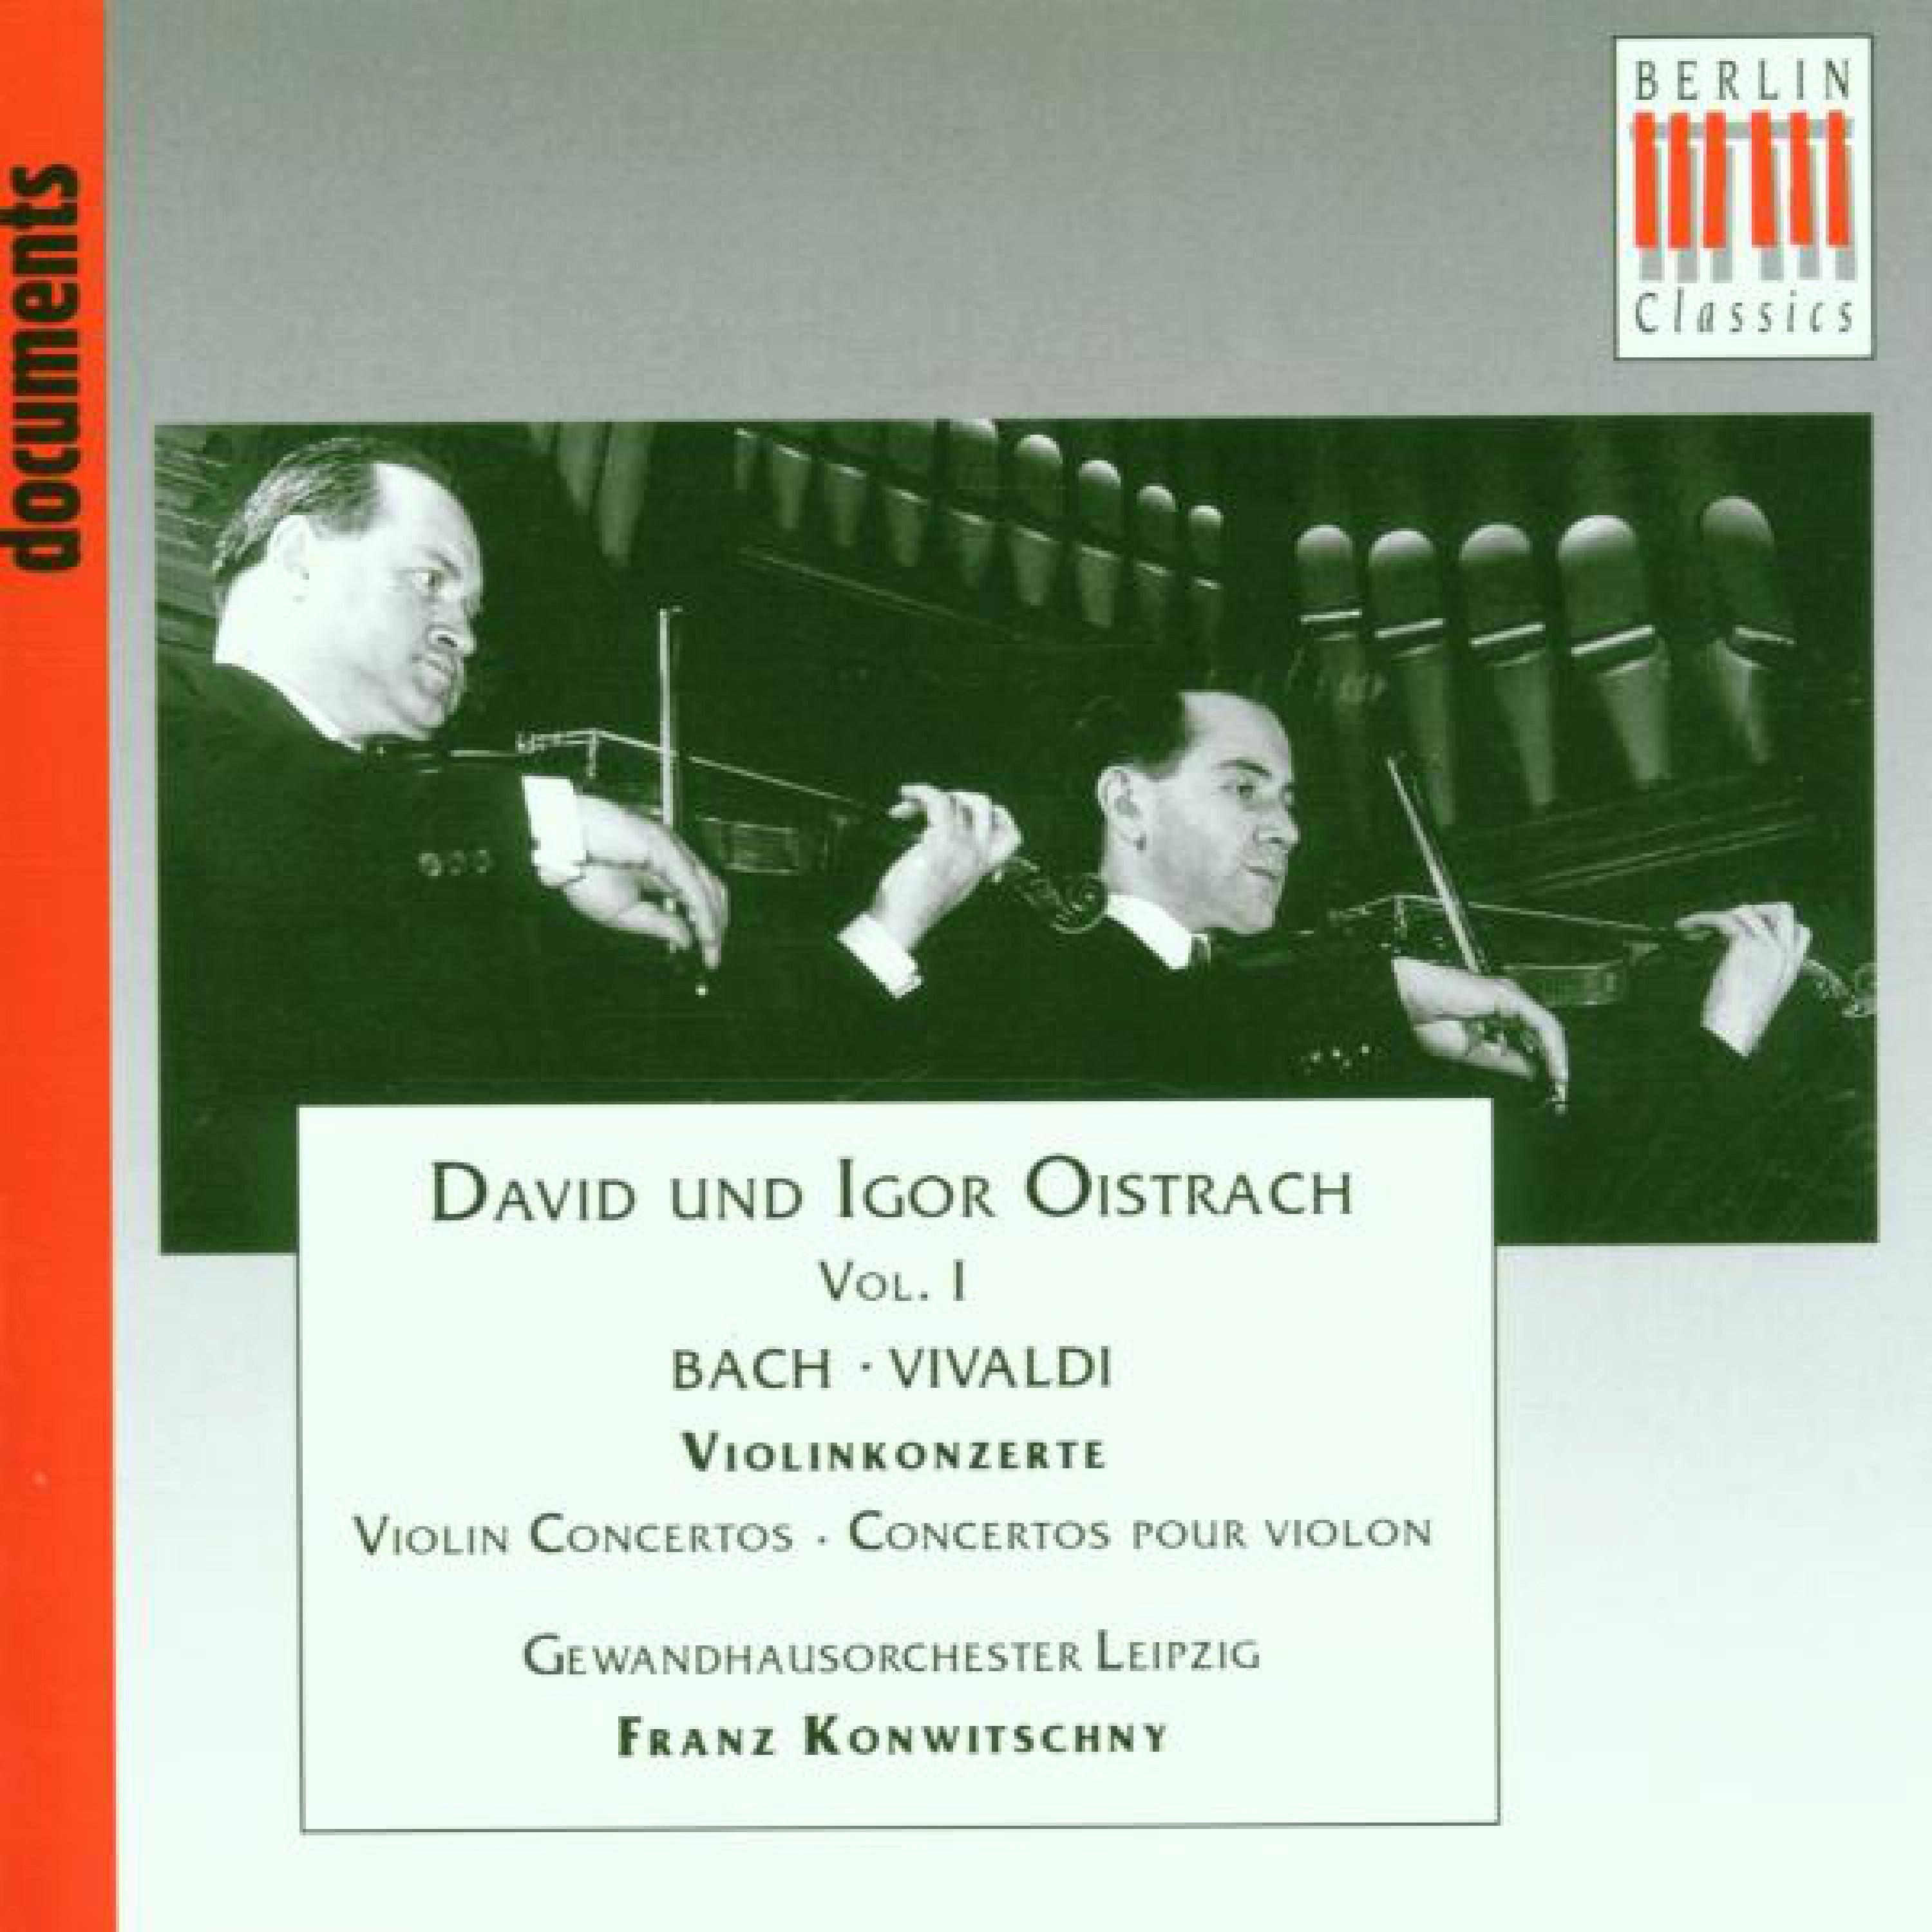 Violin Concerto in D Minor BWV 1052: 1. Allegro